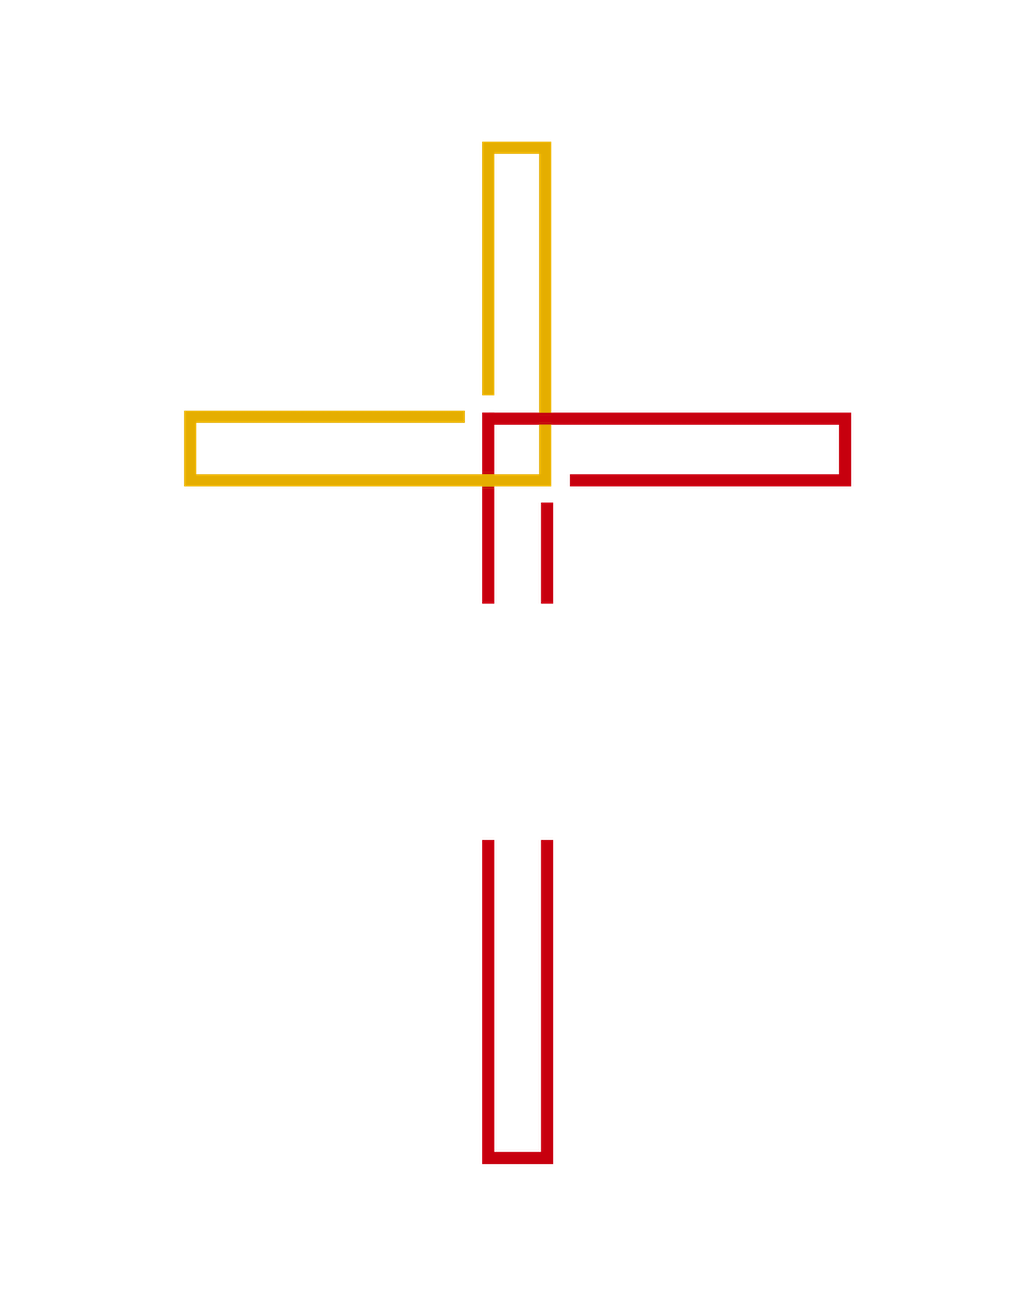 RightCross Ministries